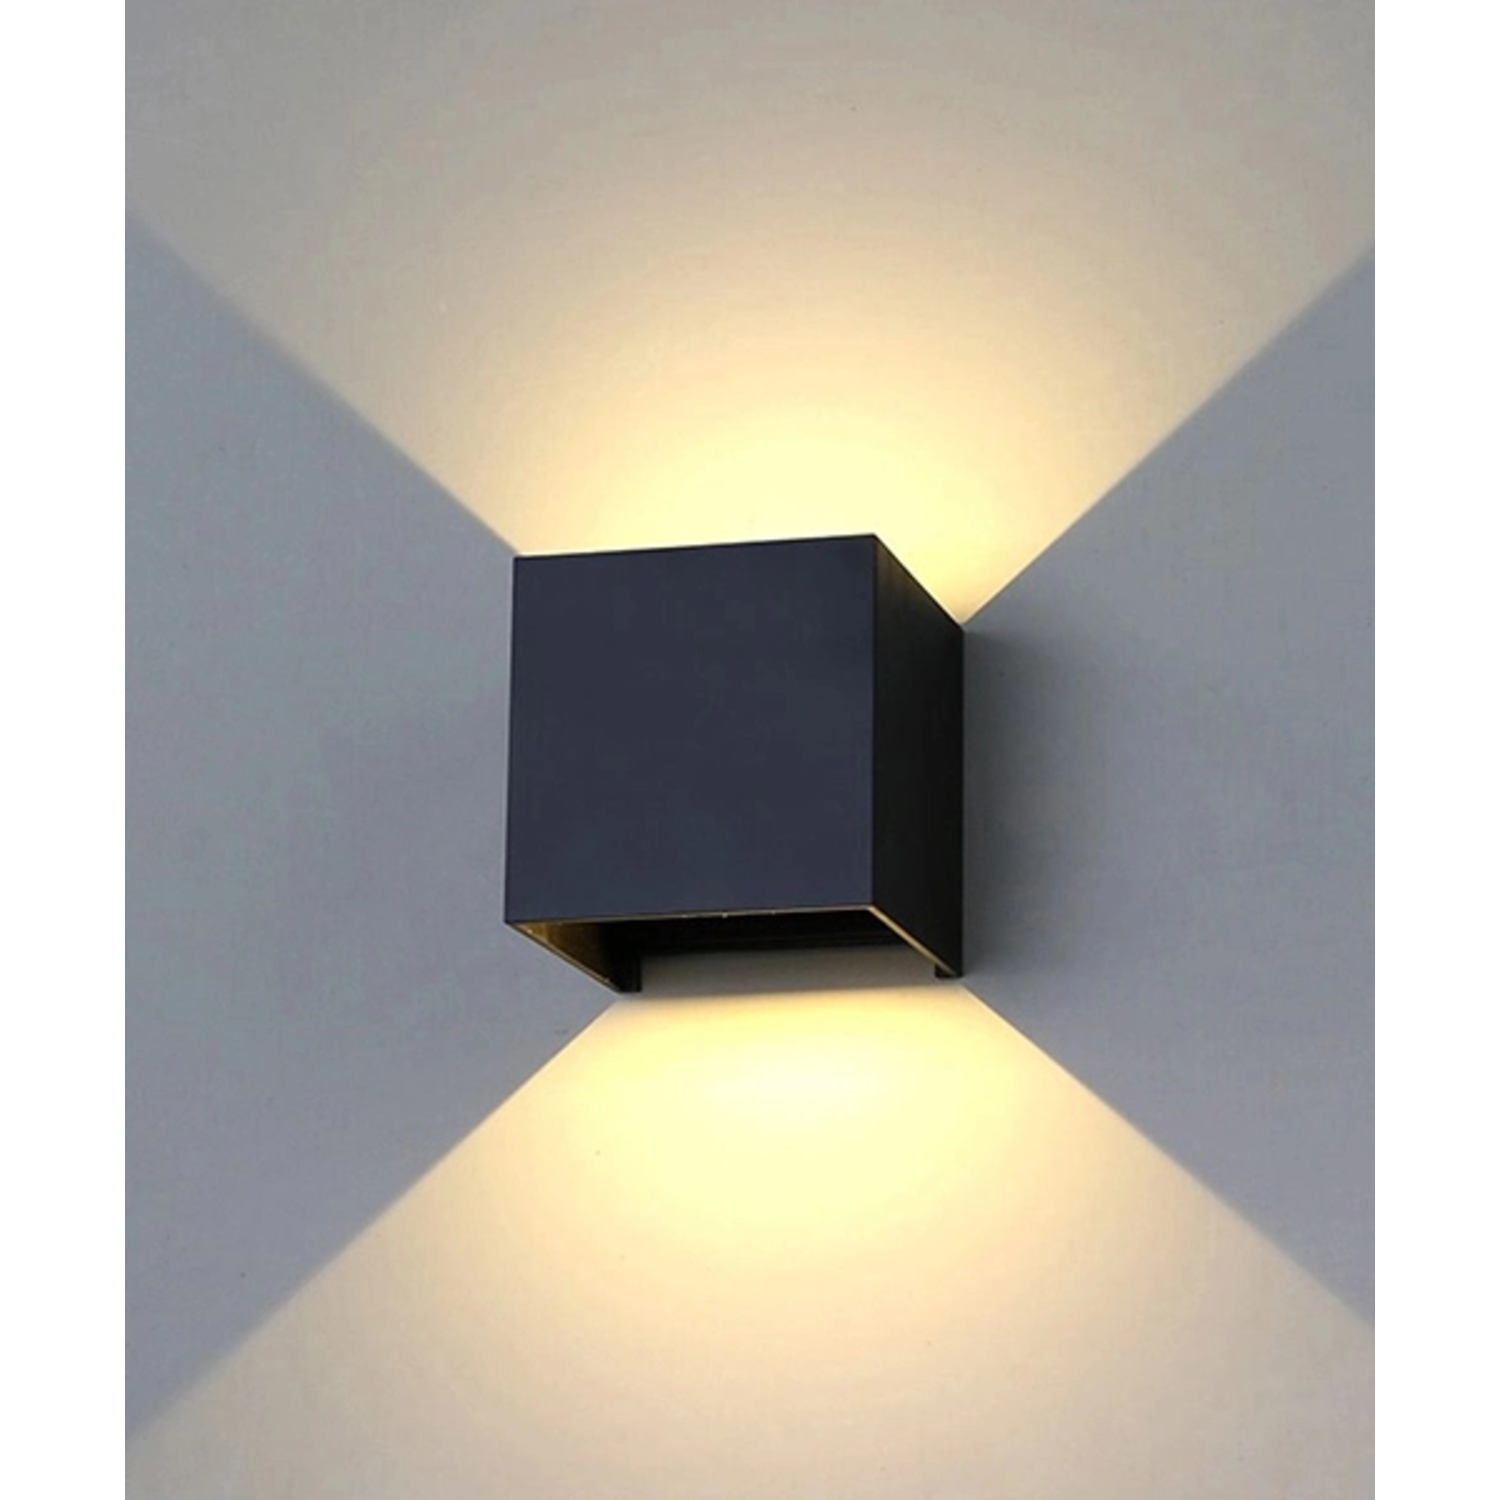 LED Wandleuchte Schwarz - 2x3W - Up and Down Abstrahlwinkel anpassbar -  Lichtfarbe optional